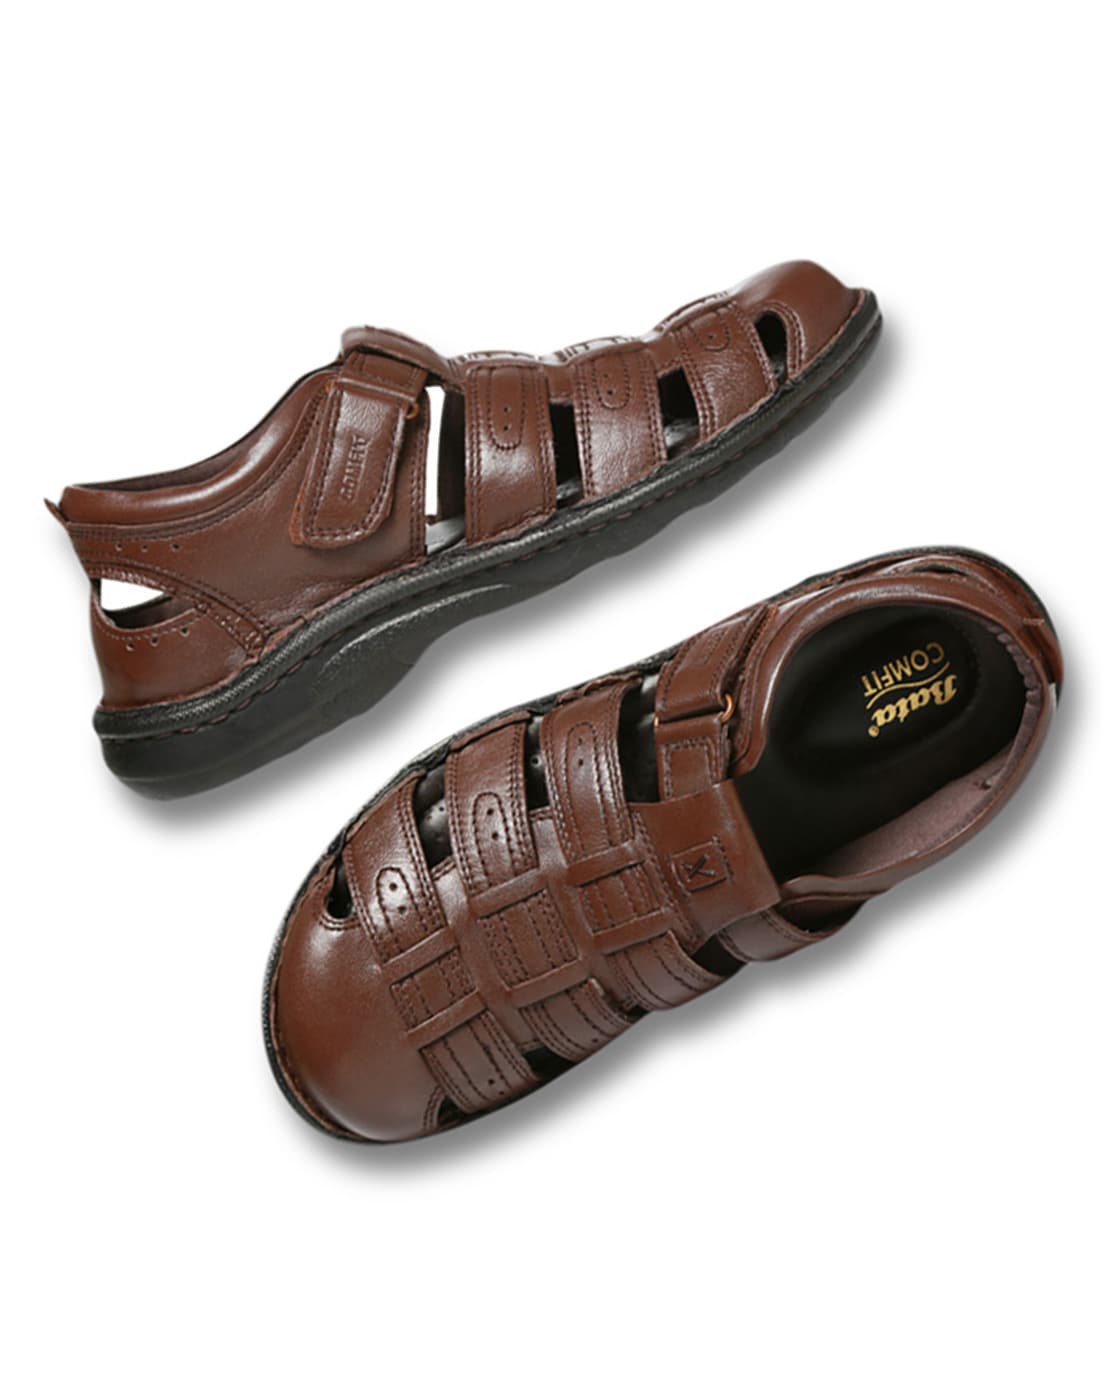 Top more than 62 new bata sandals for men best